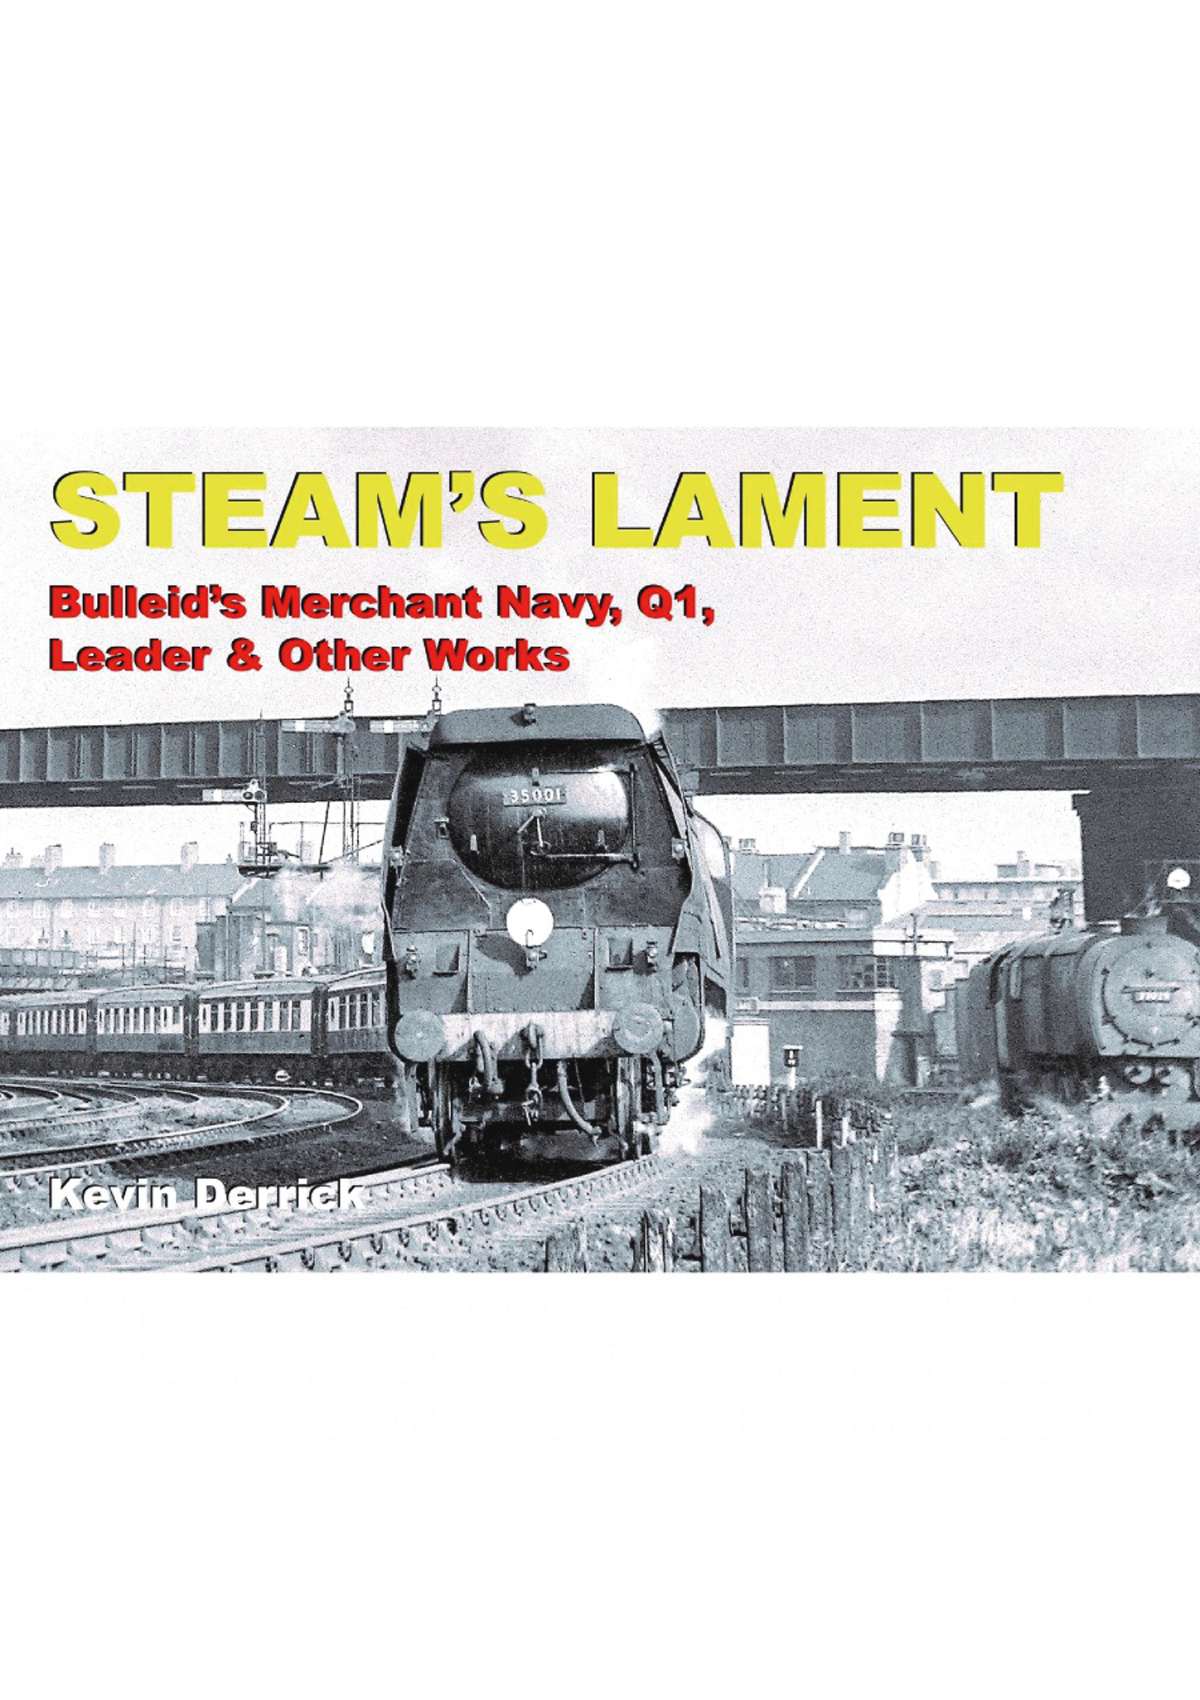 Steam's Lament - Bulleid's Merchant Navy, Q1, Leader & other works